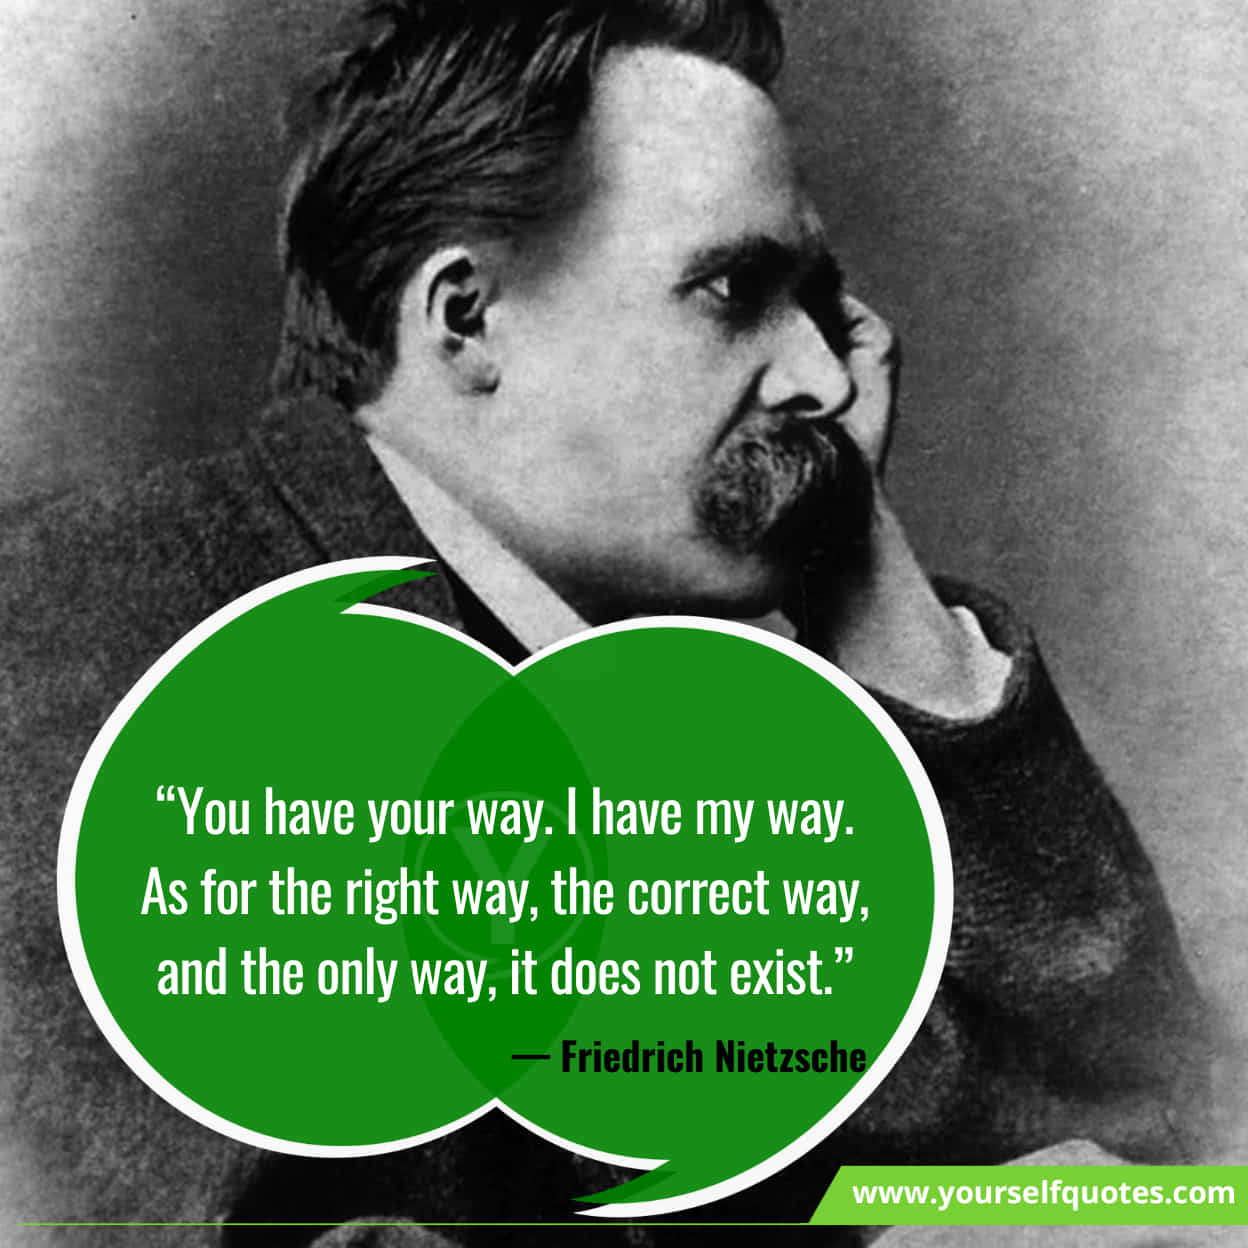 Latest Friedrich Nietzsche Quotes From Love